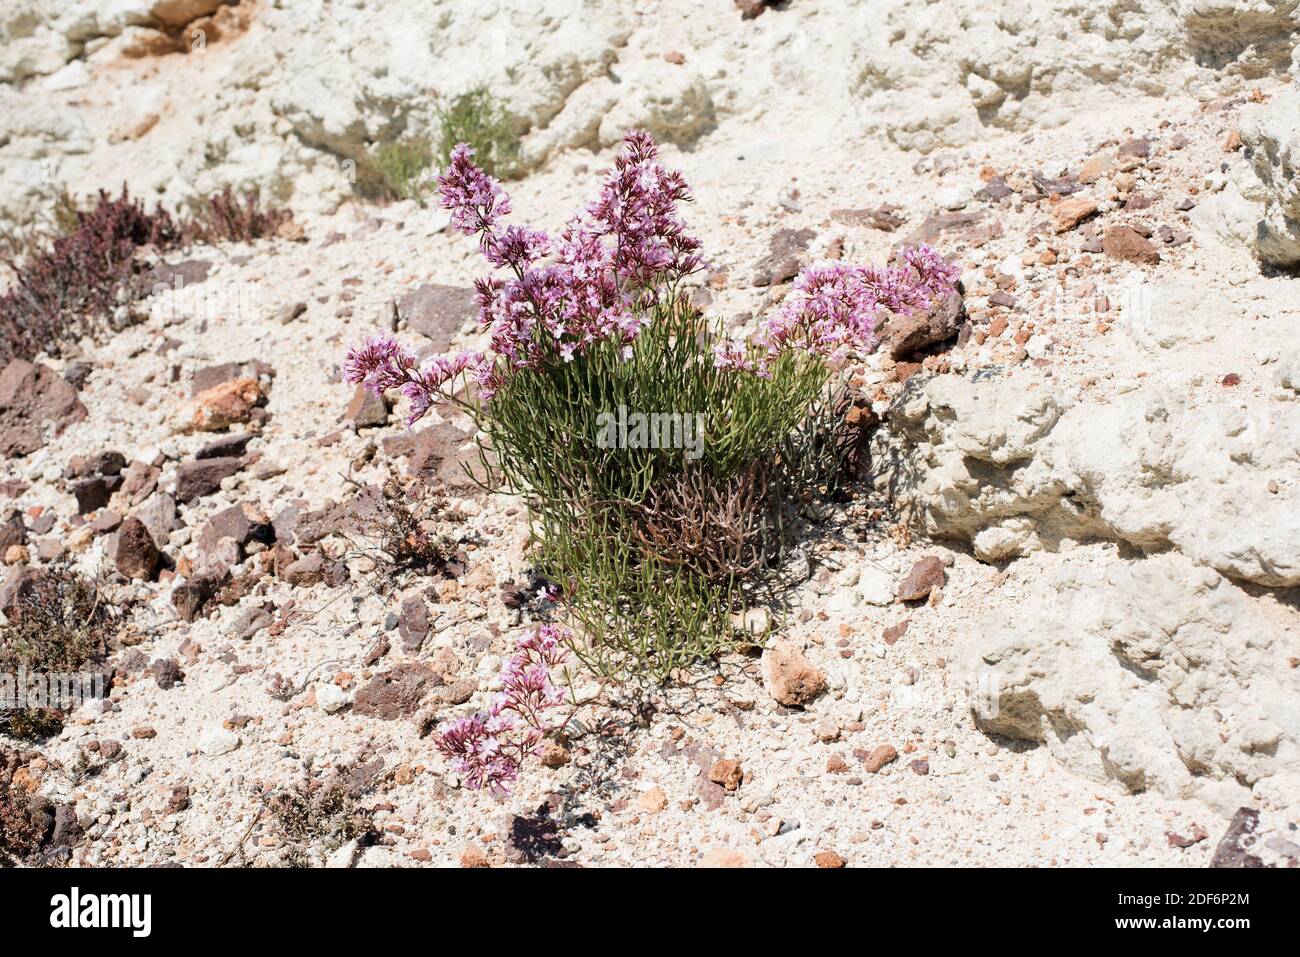 Siempreviva rosa or siempreviva de saladar (Limonium insigne) is a subshrub endemic to southeastern Spain. This photo was taken in Cabo de Gata Stock Photo